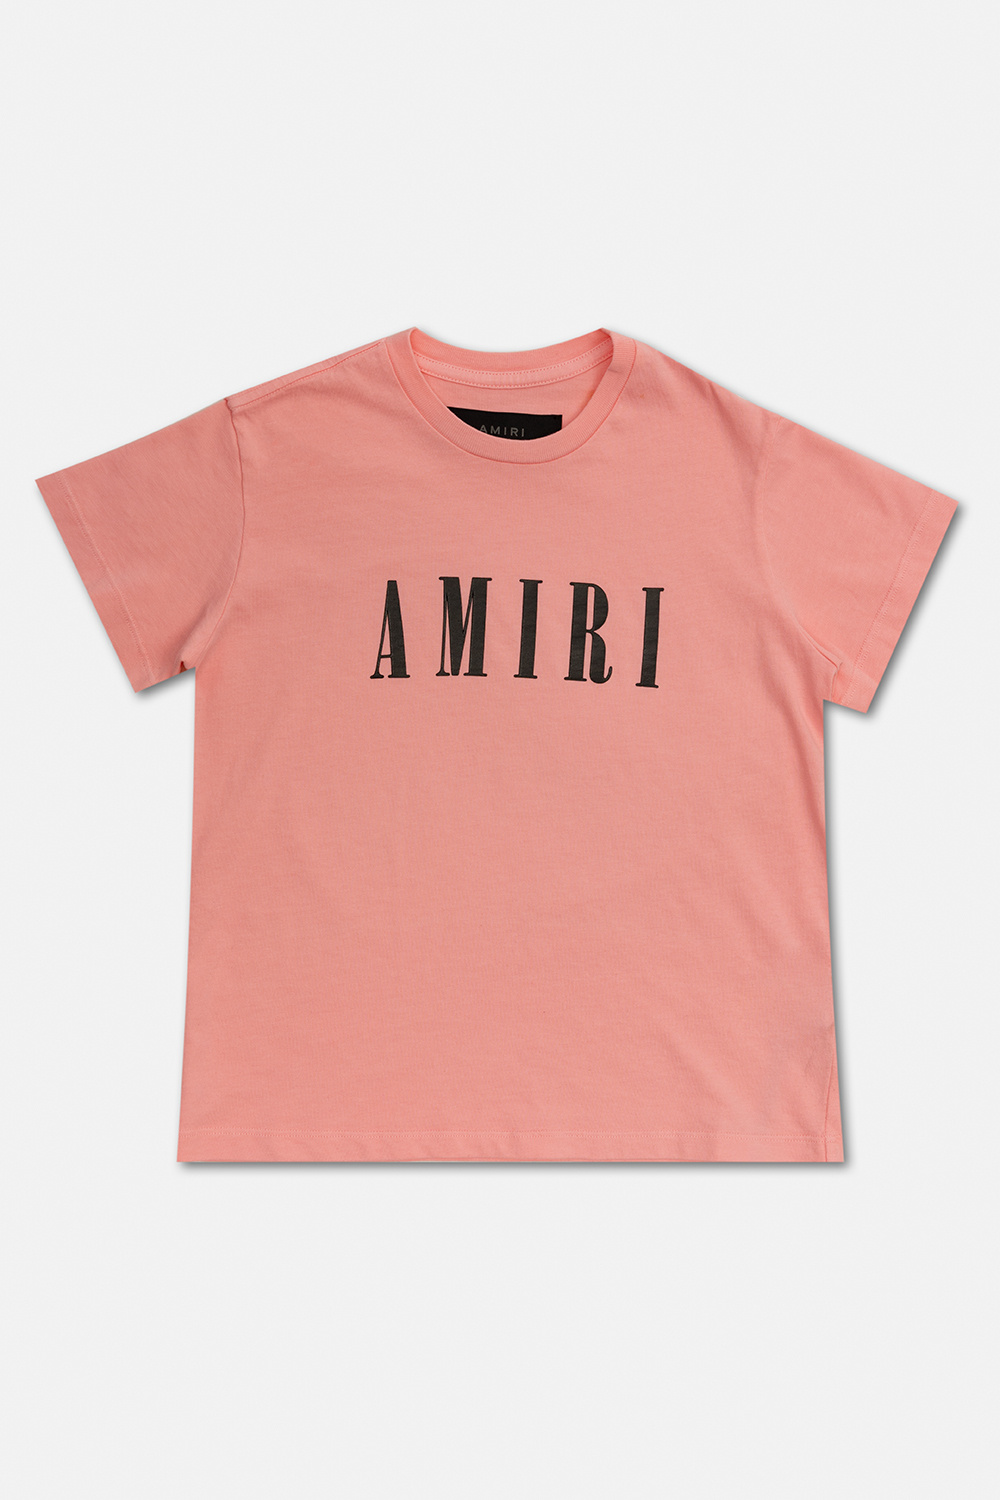 Amiri Kids Ella Chevron Frill Shirt